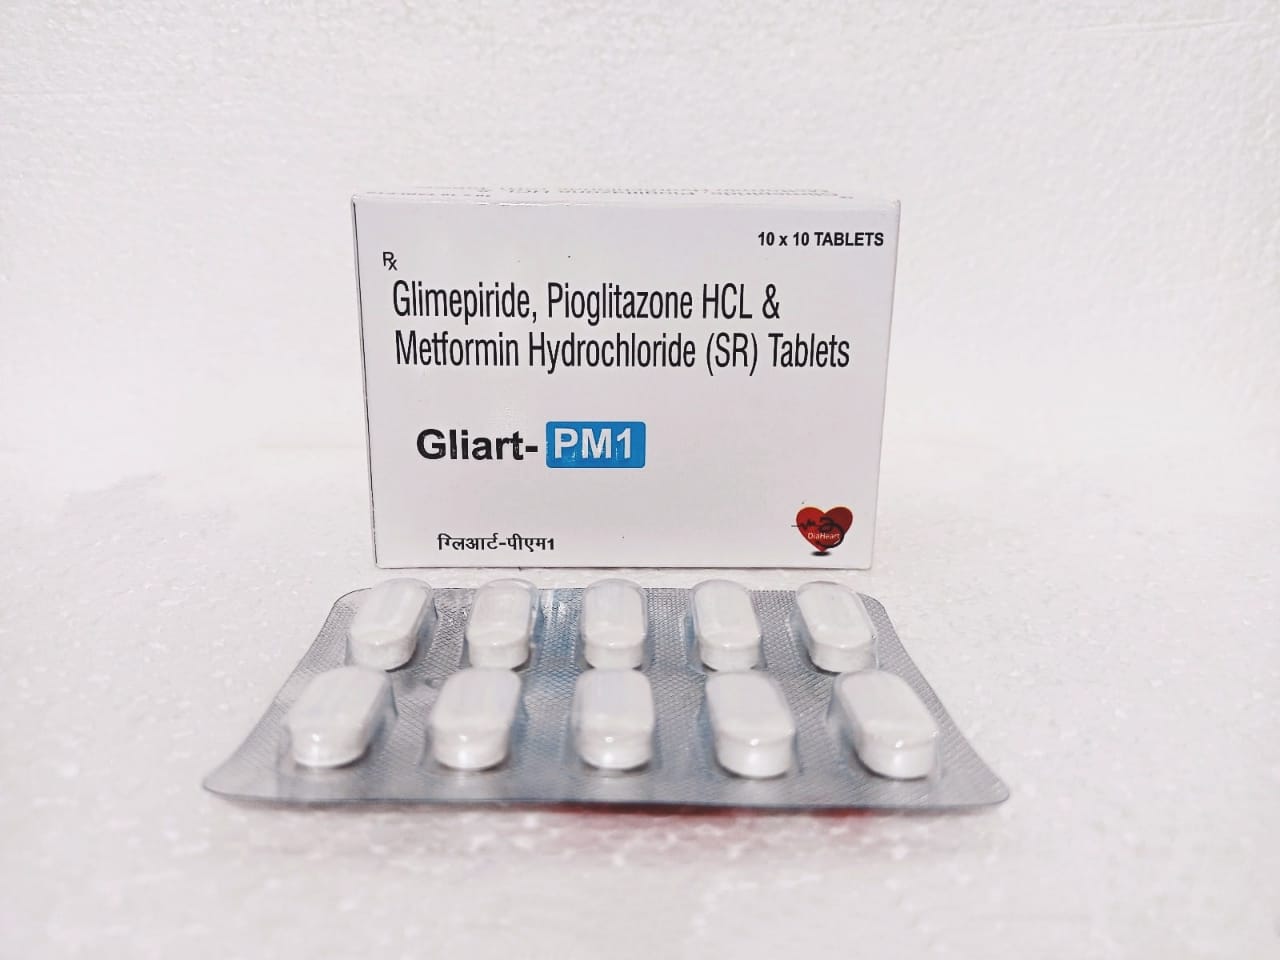 GLIART-PM1